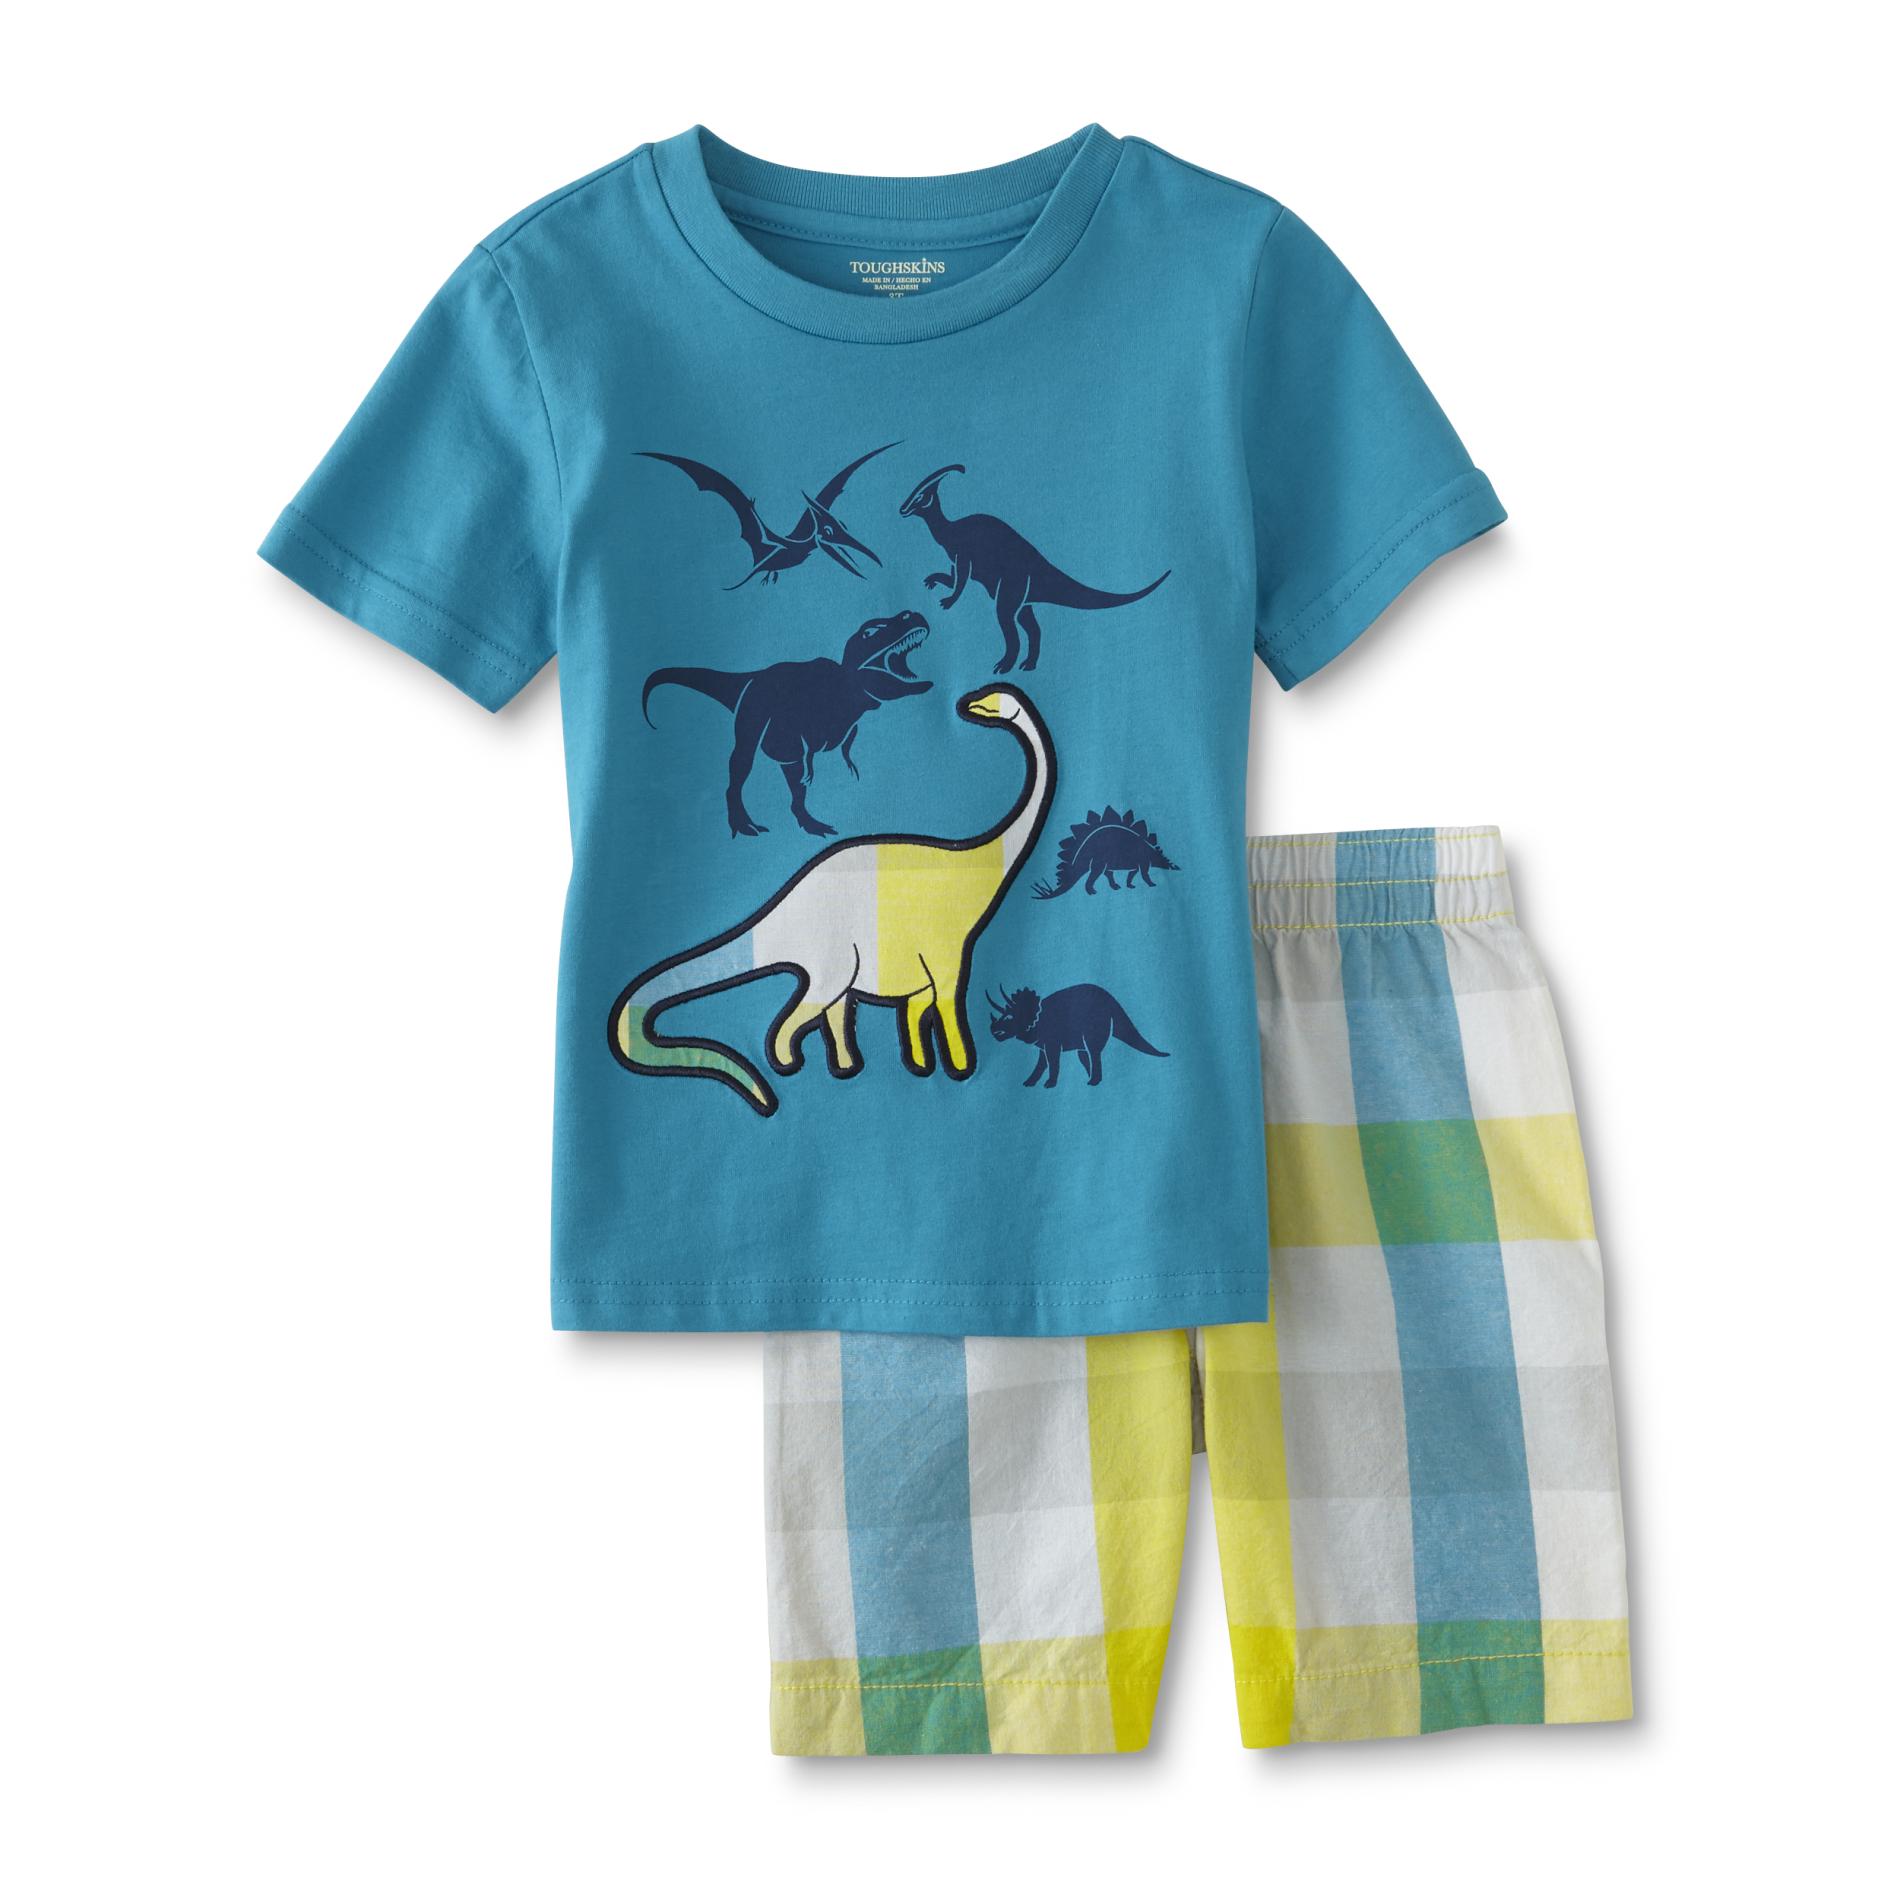 Toughskins Infant & Toddler Boys' T-Shirt & Shorts - Dinosaurs